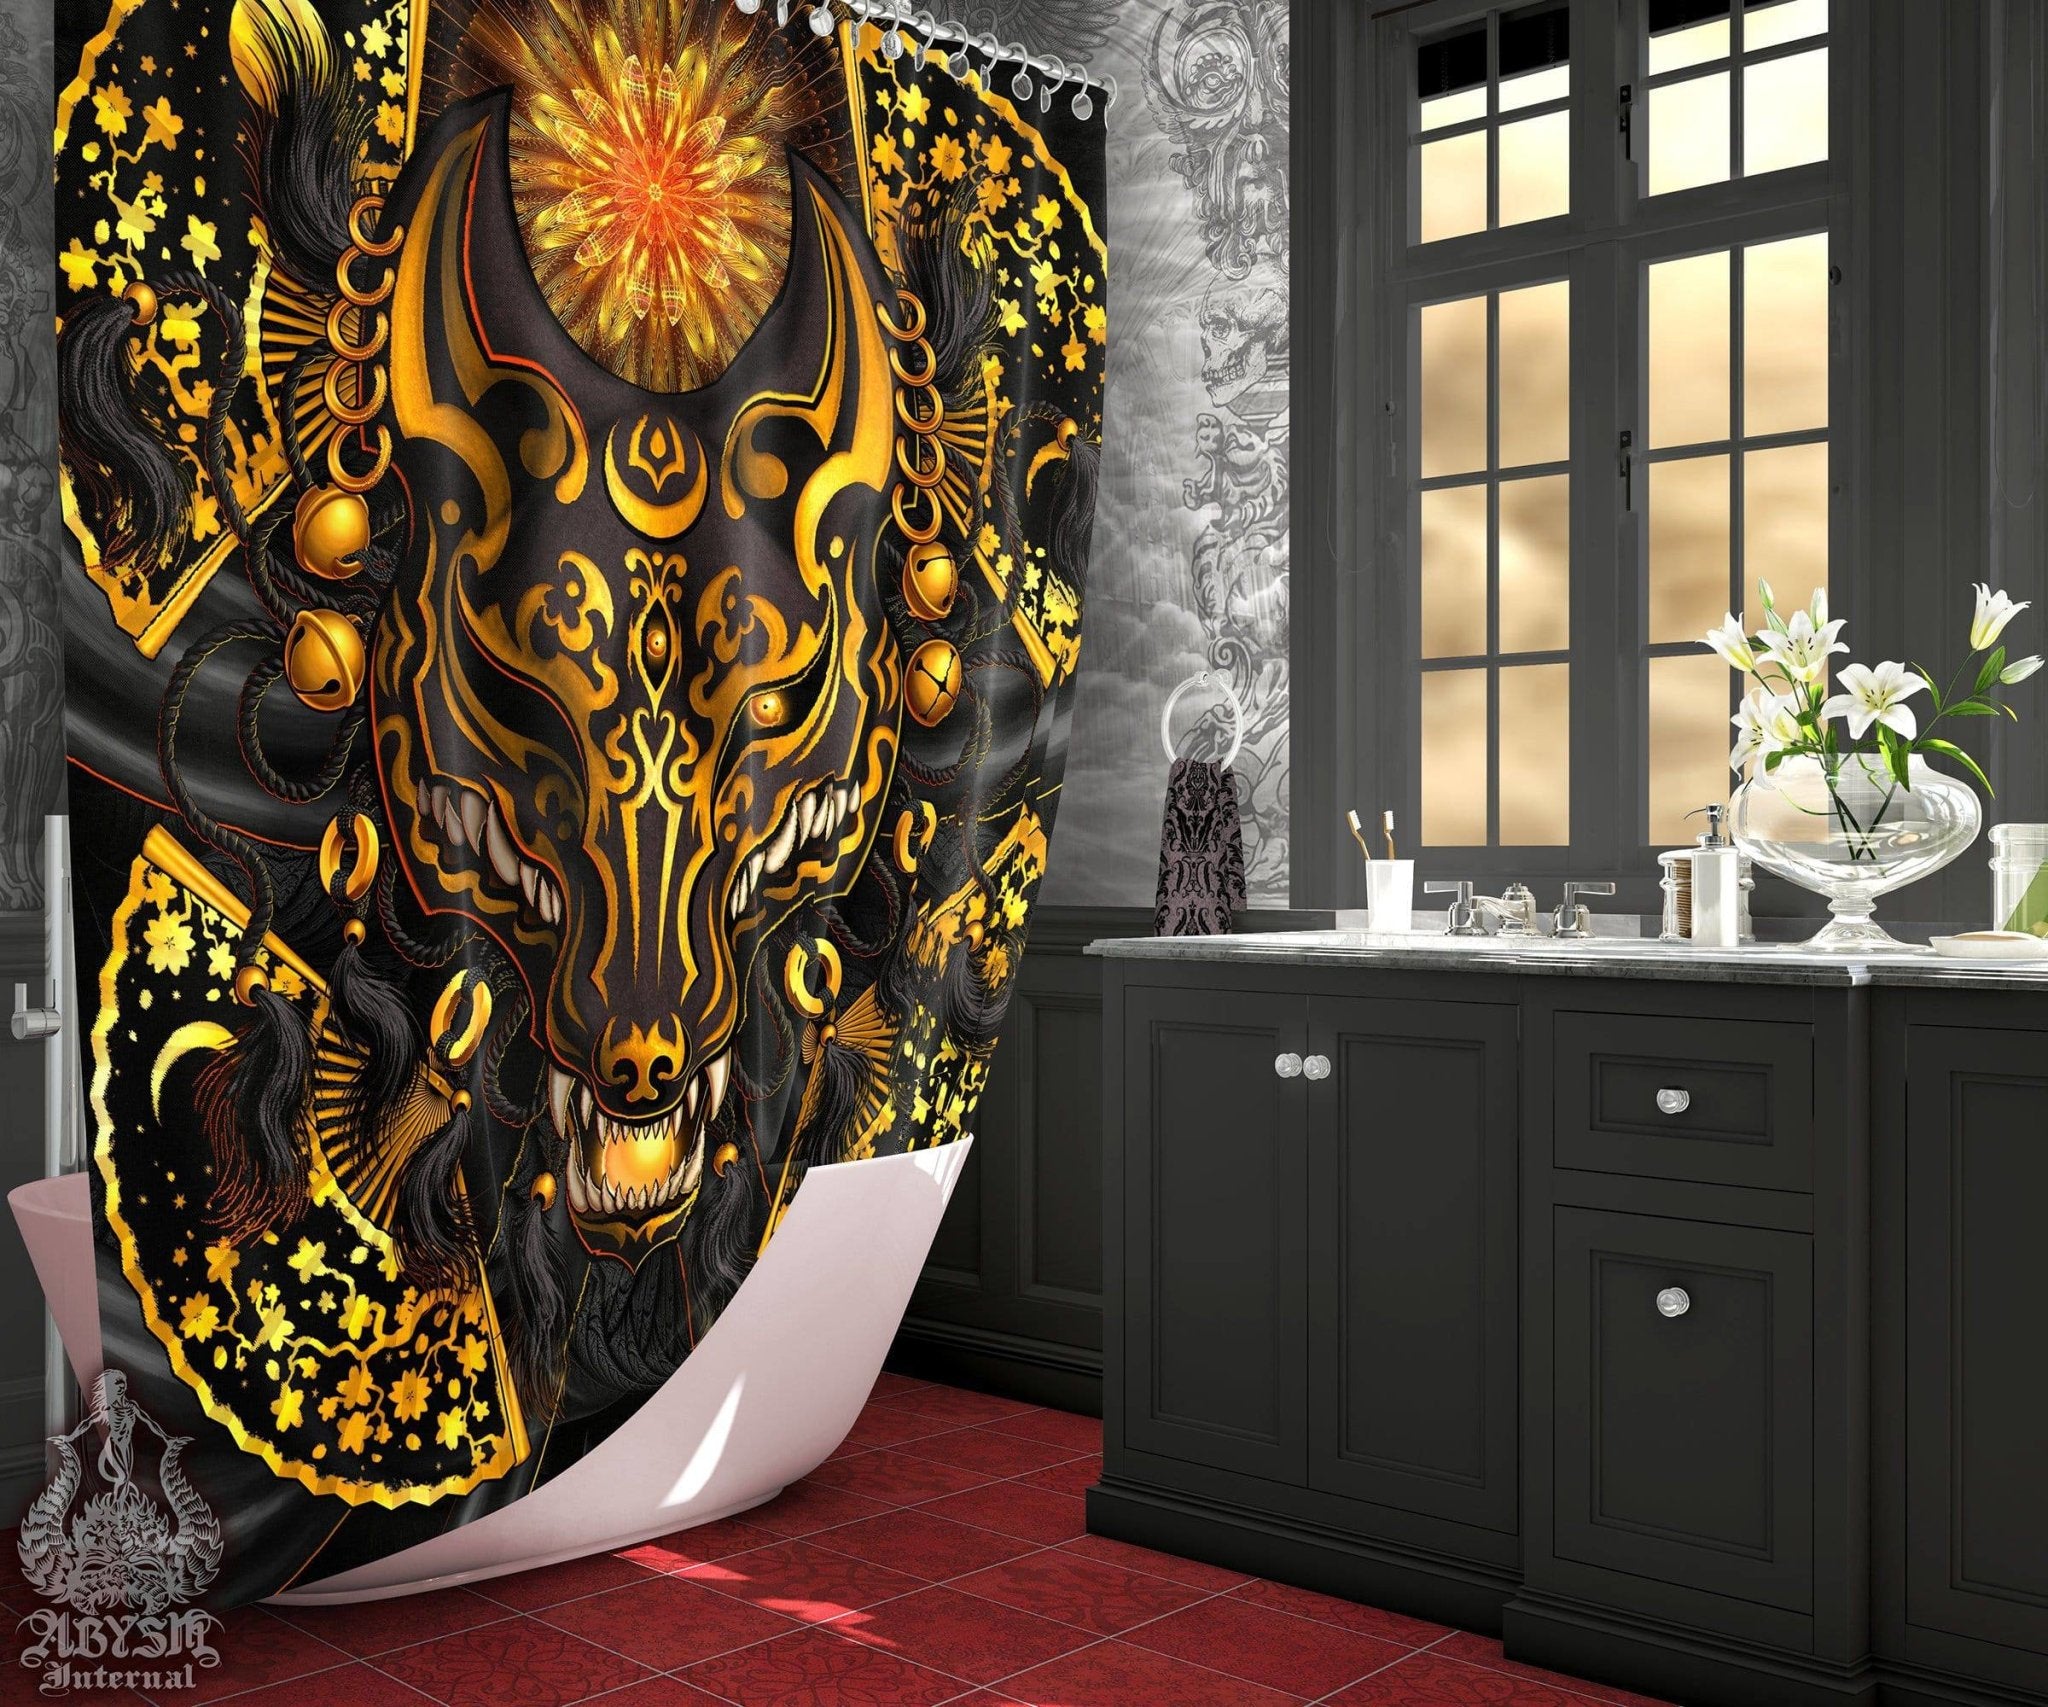 Kitsune Shower Curtain, Japanese Fox Mask, Okami, Gamer and Anime Bathroom Decor - Black & Gold - Abysm Internal